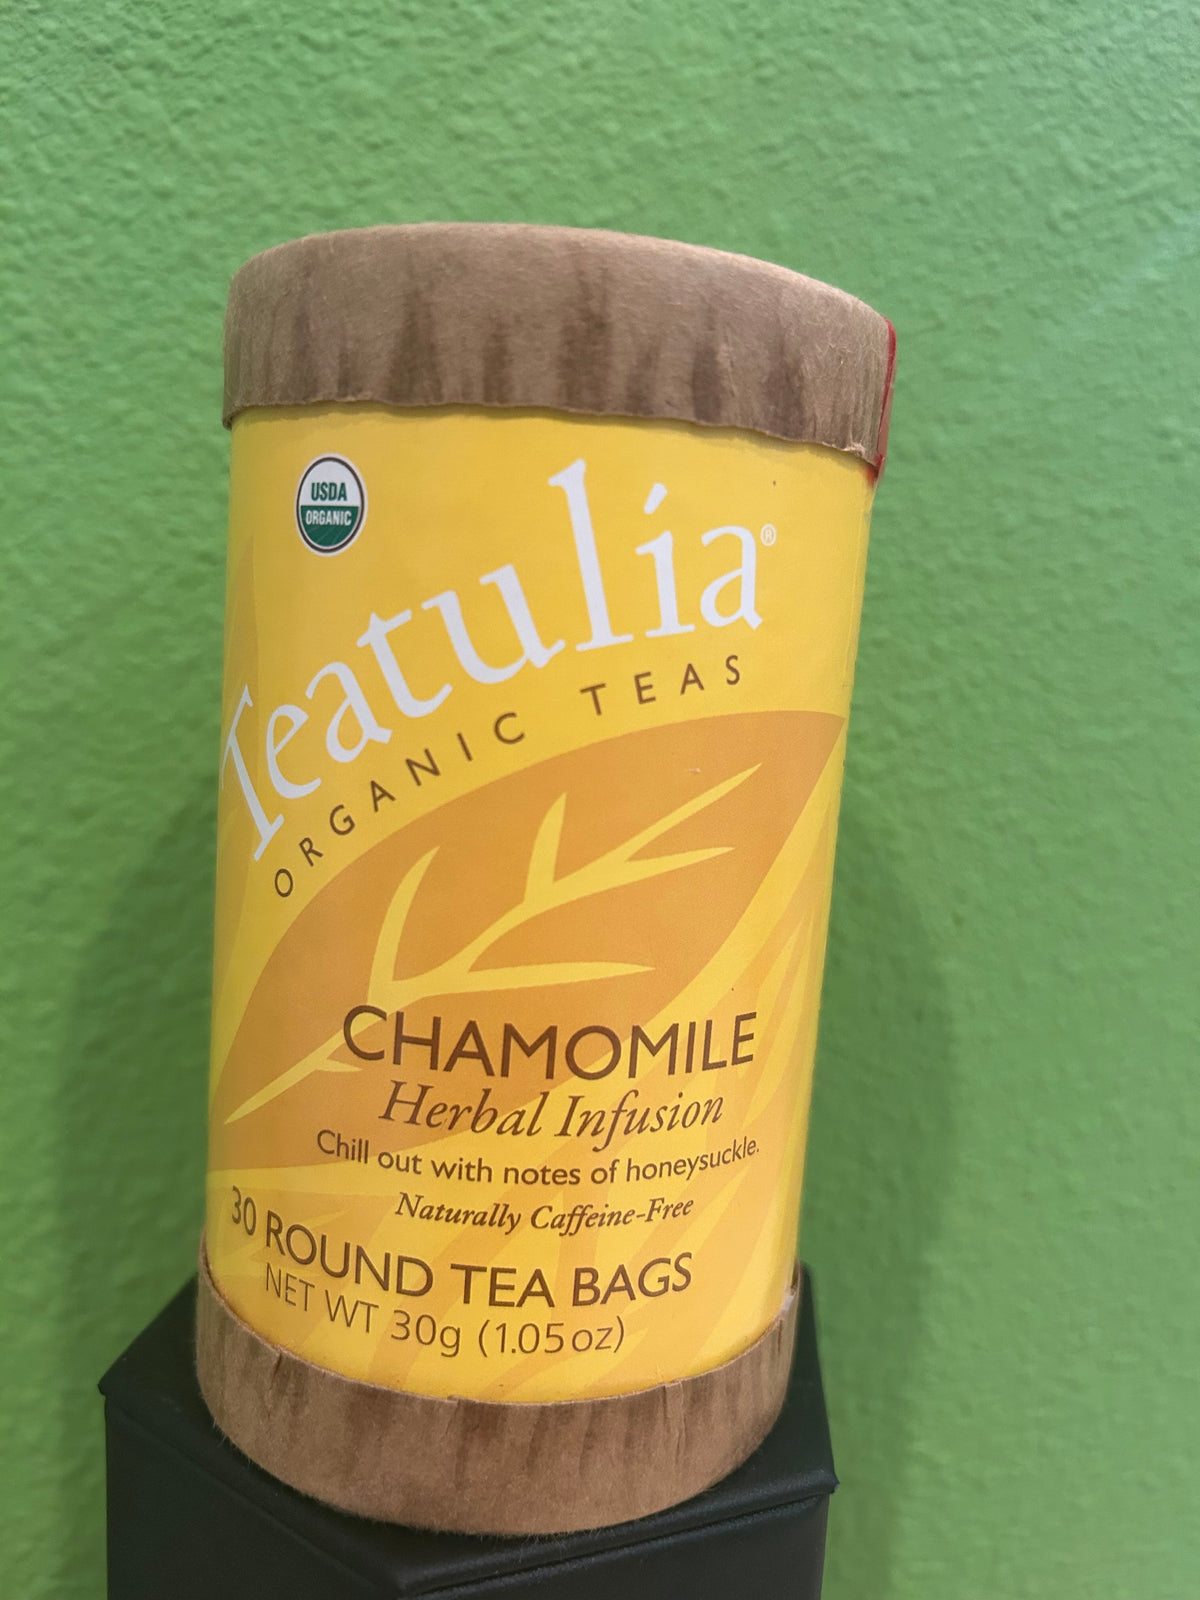 Teatulia Organic Teas-Chamomile Herbal Infusion